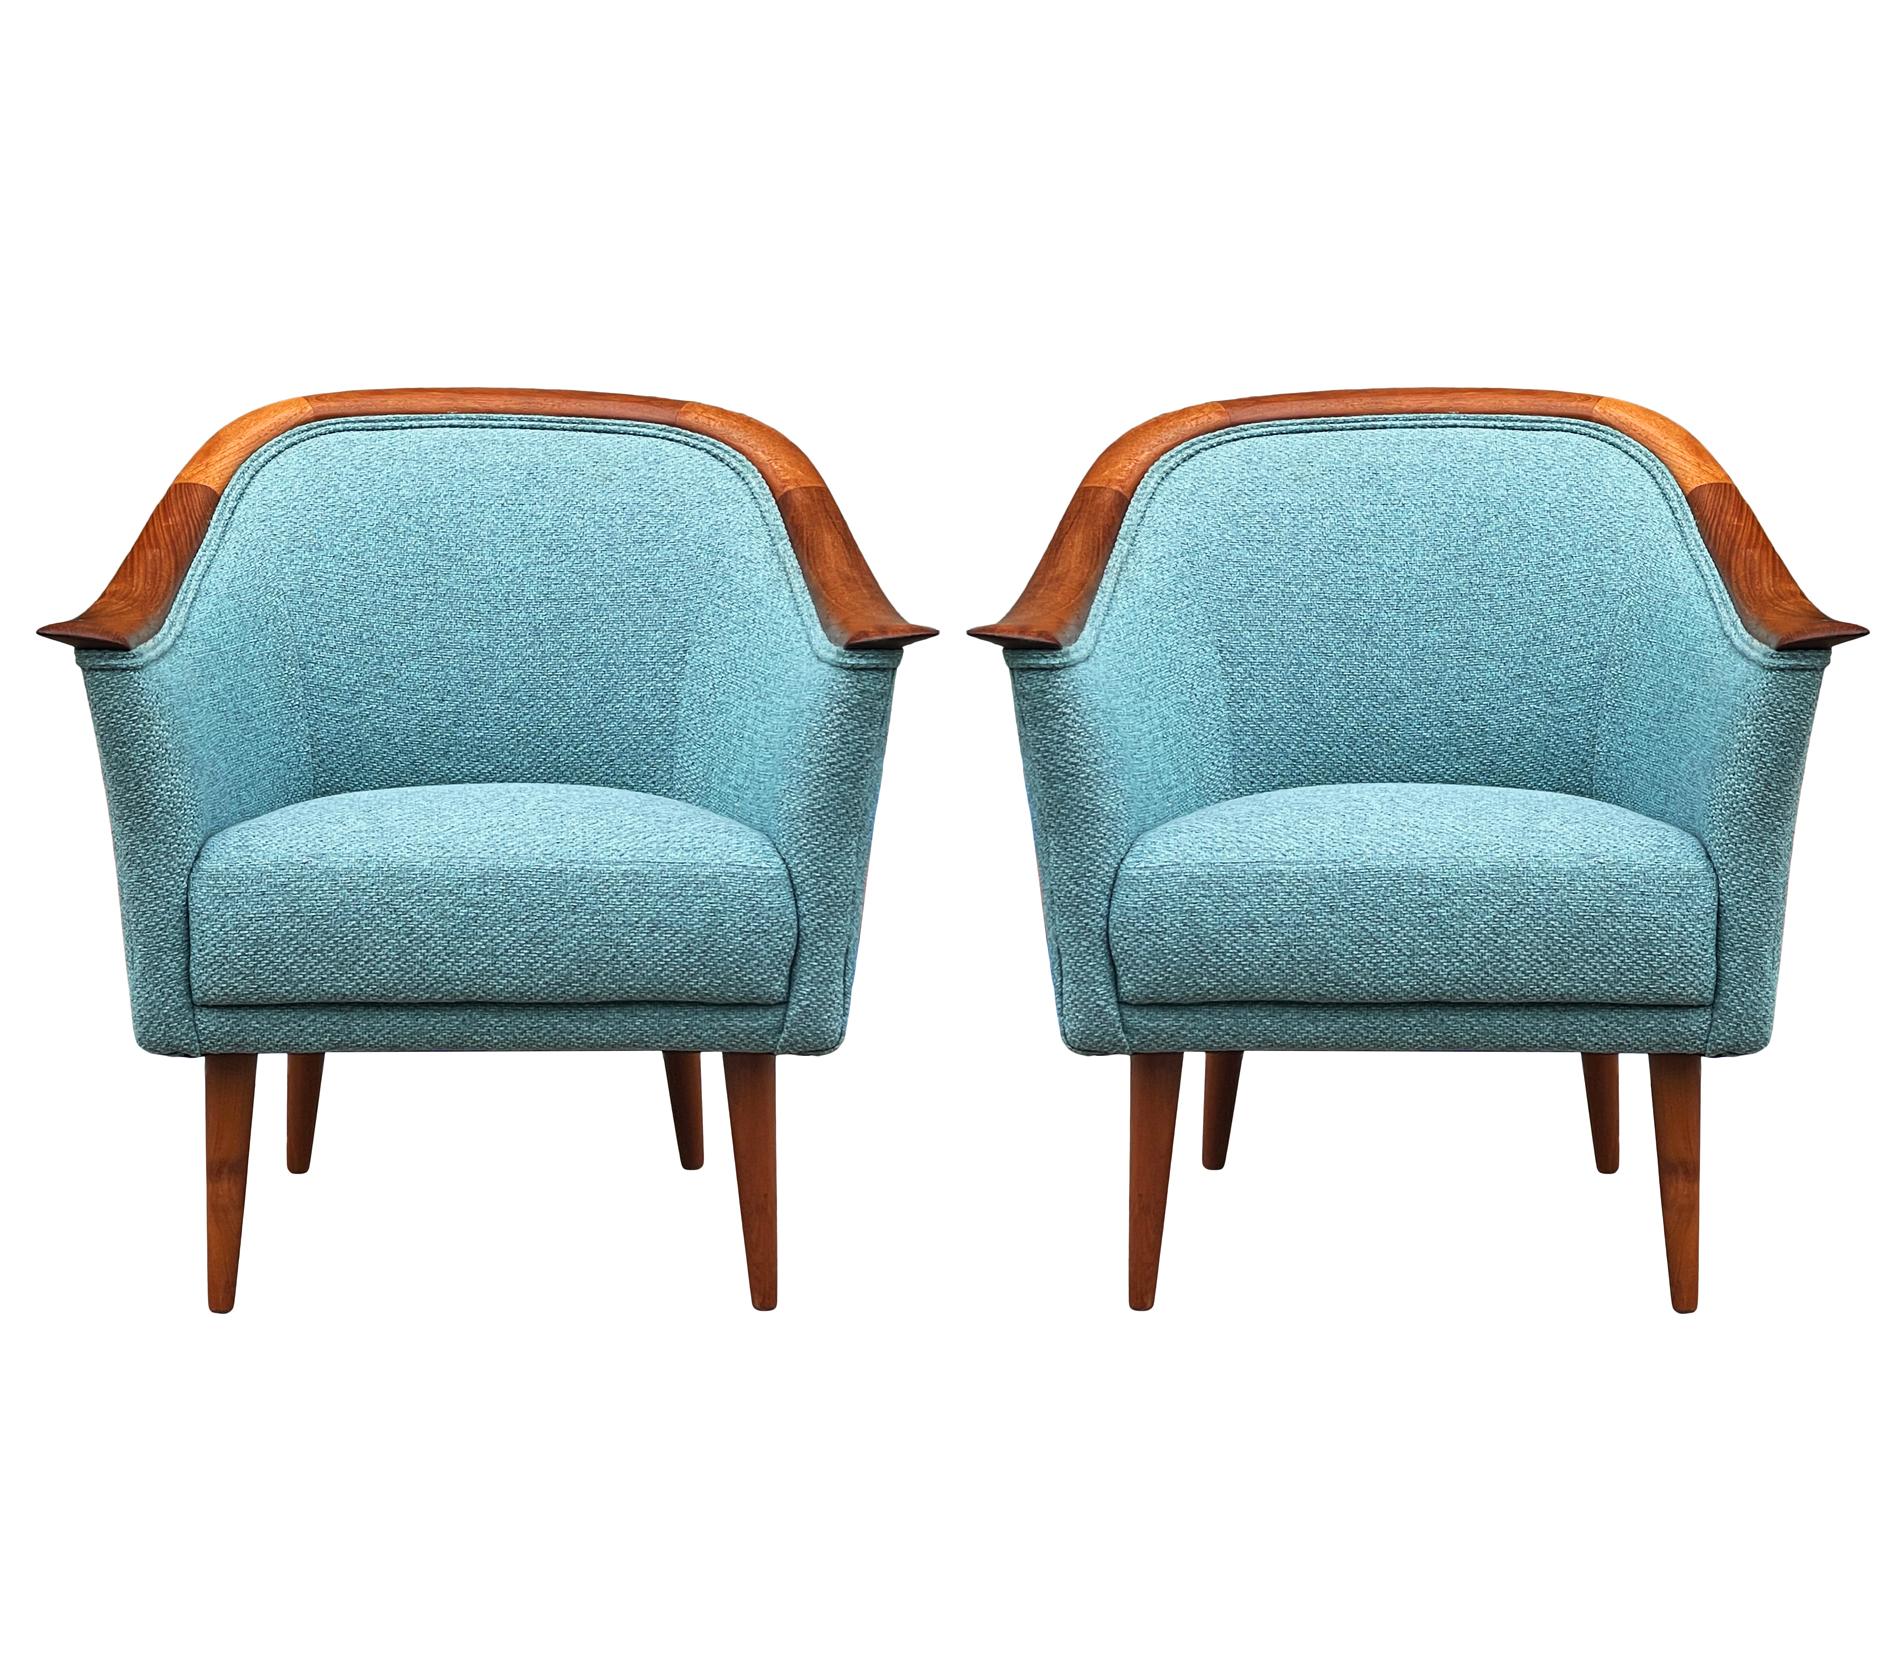 Matching Pair of Mid Century Danish Modern Lounge Chairs in Teak & Sage Tweed For Sale 5